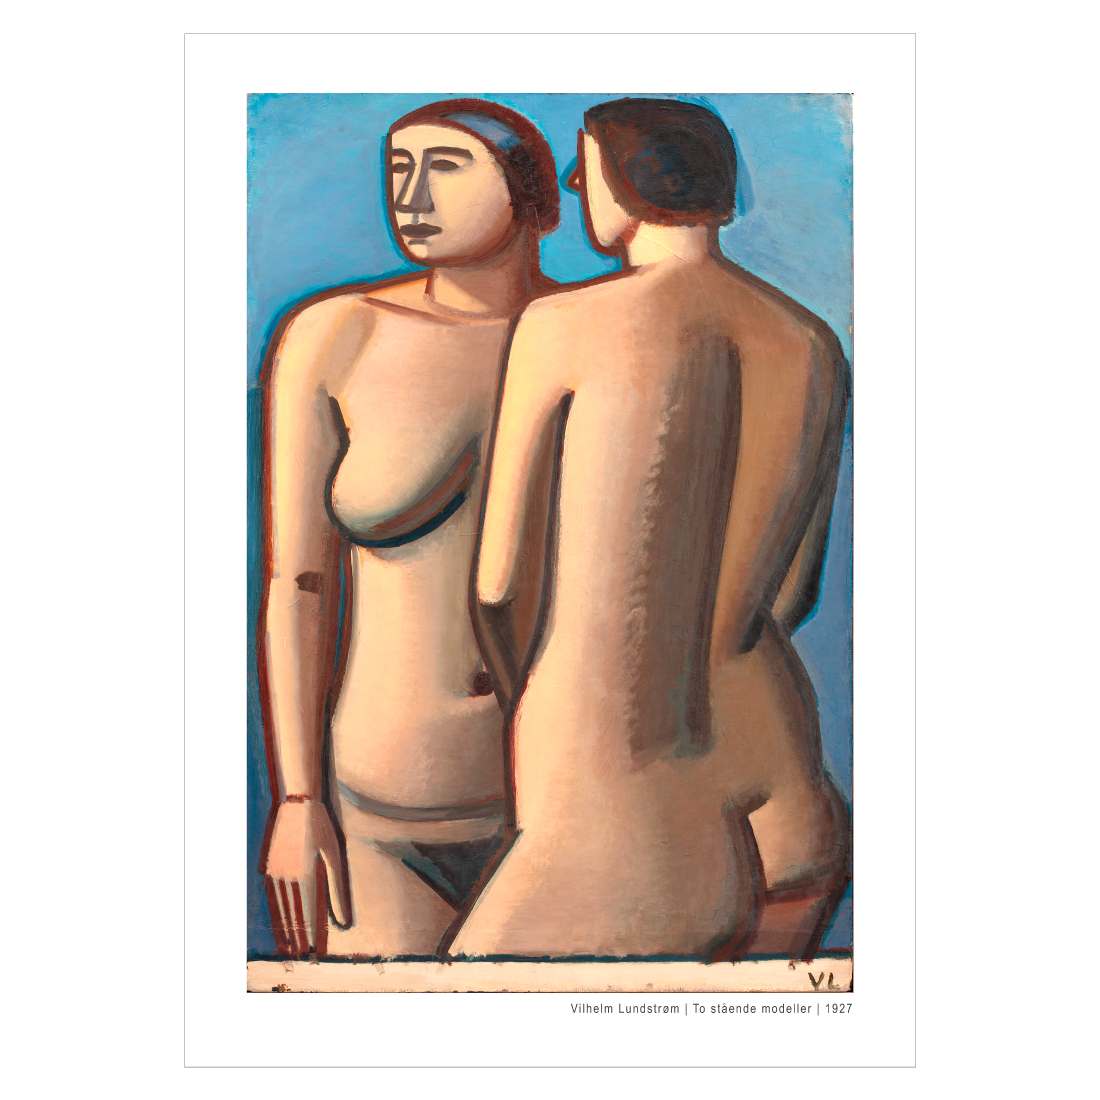 Kunstplakat med Vilhelm Lundstrøms "To stående modeller"